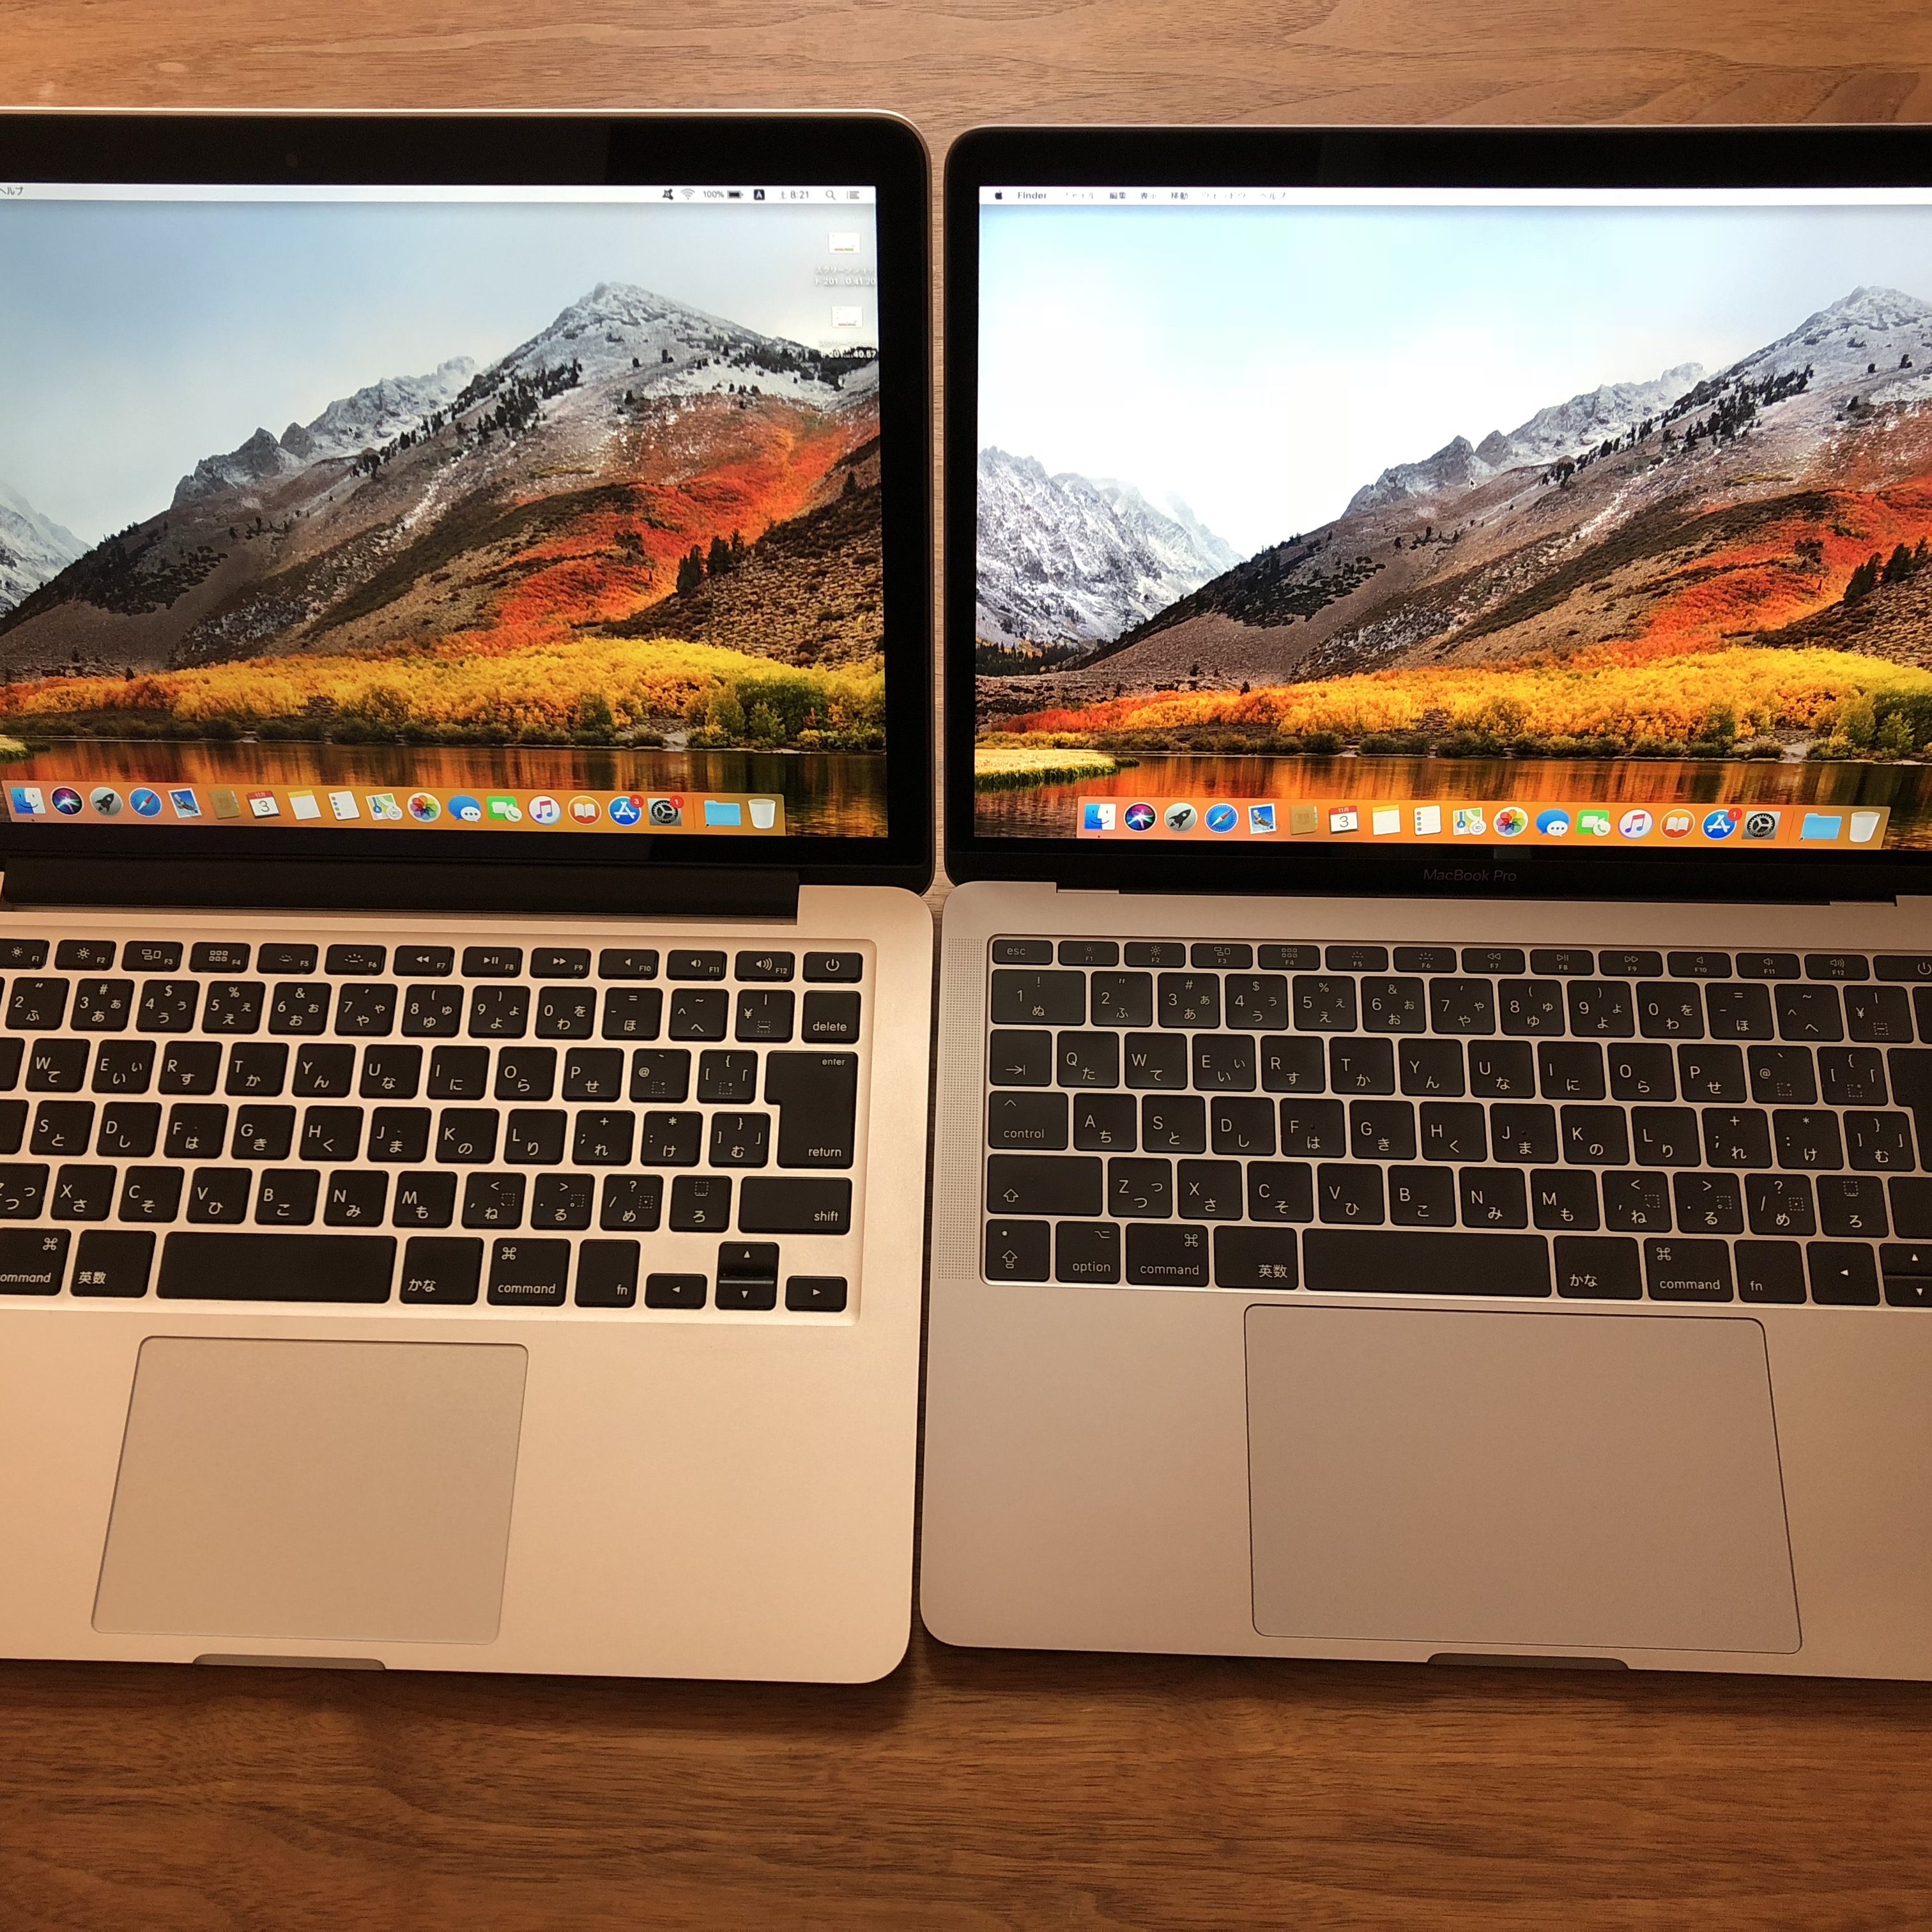 MacbookPro（2017年モデル）とMacbookPro（2014年モデル）の比較3